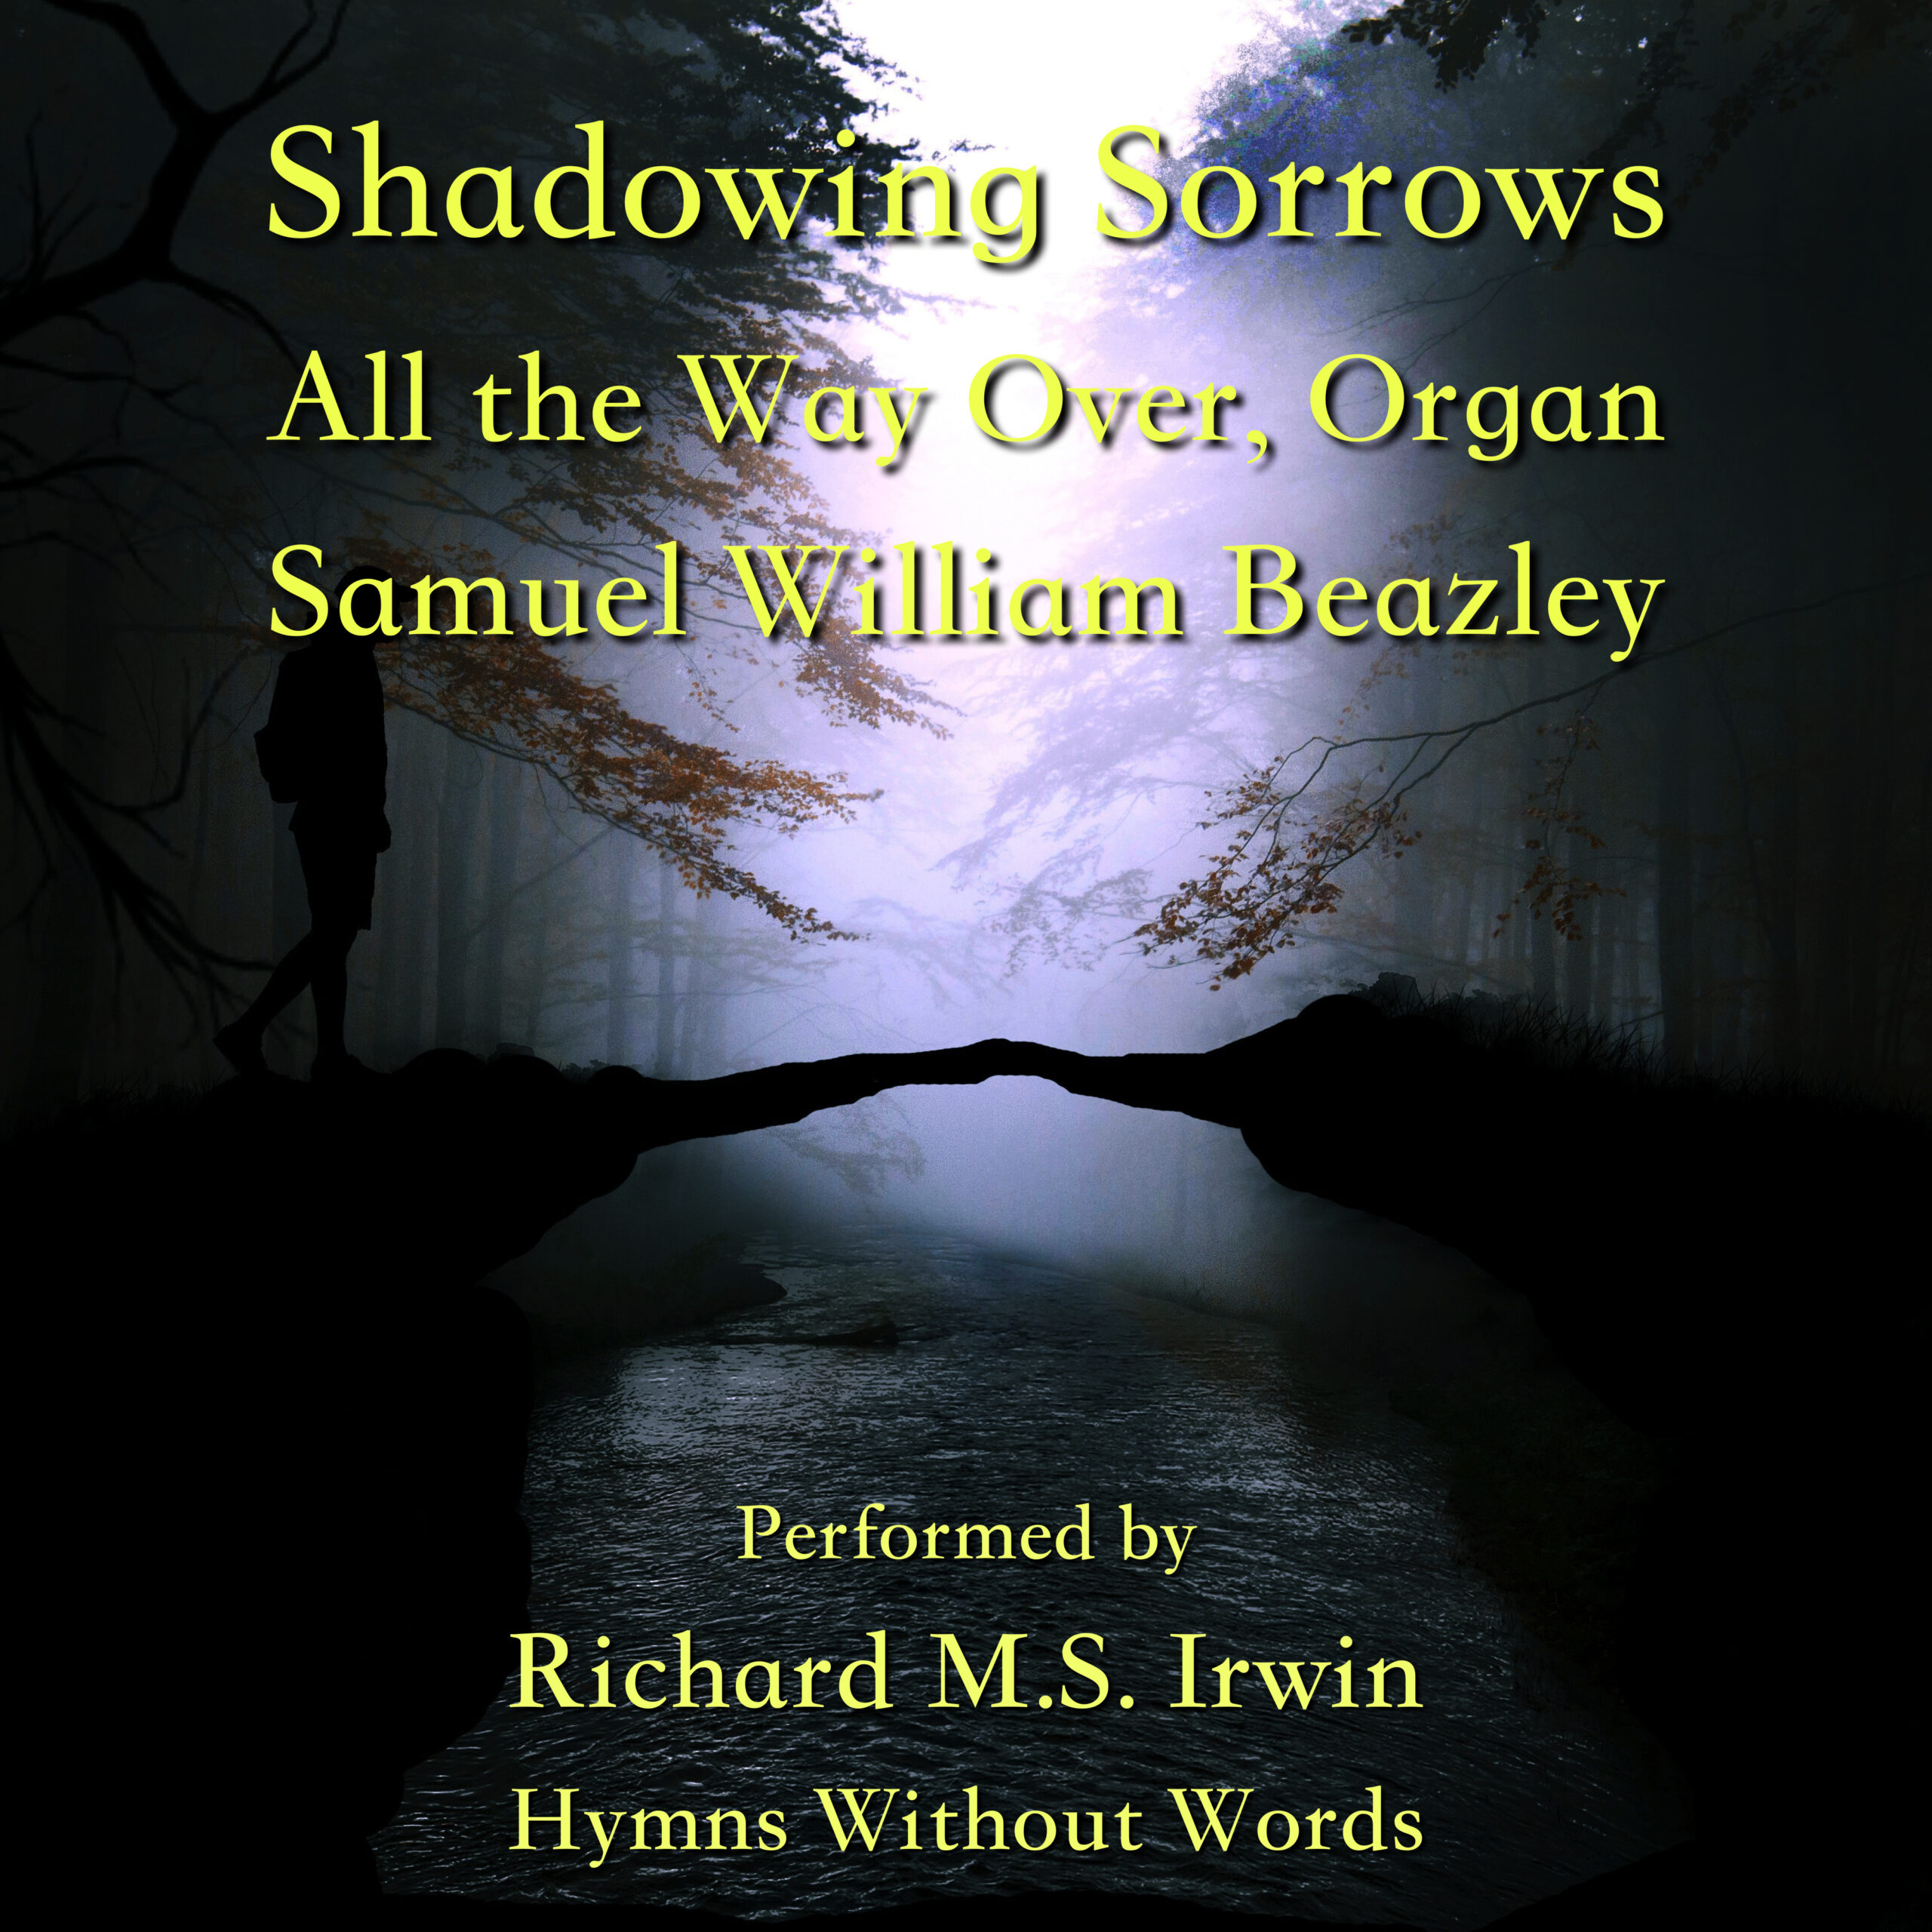 Shadowing Sorrows